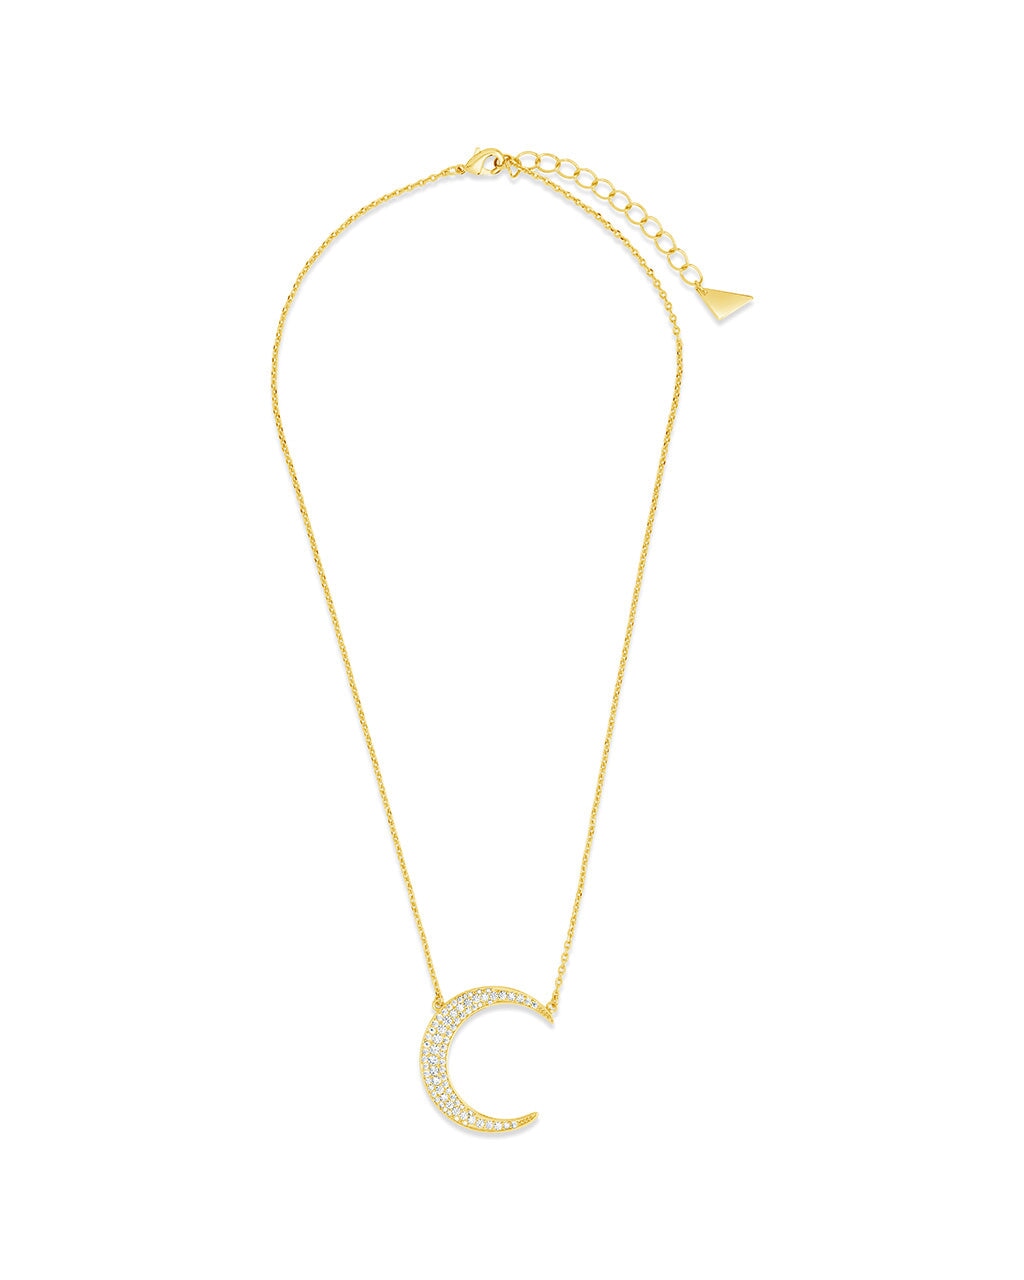 Stationed CZ Crescent Necklace Necklace Sterling Forever 